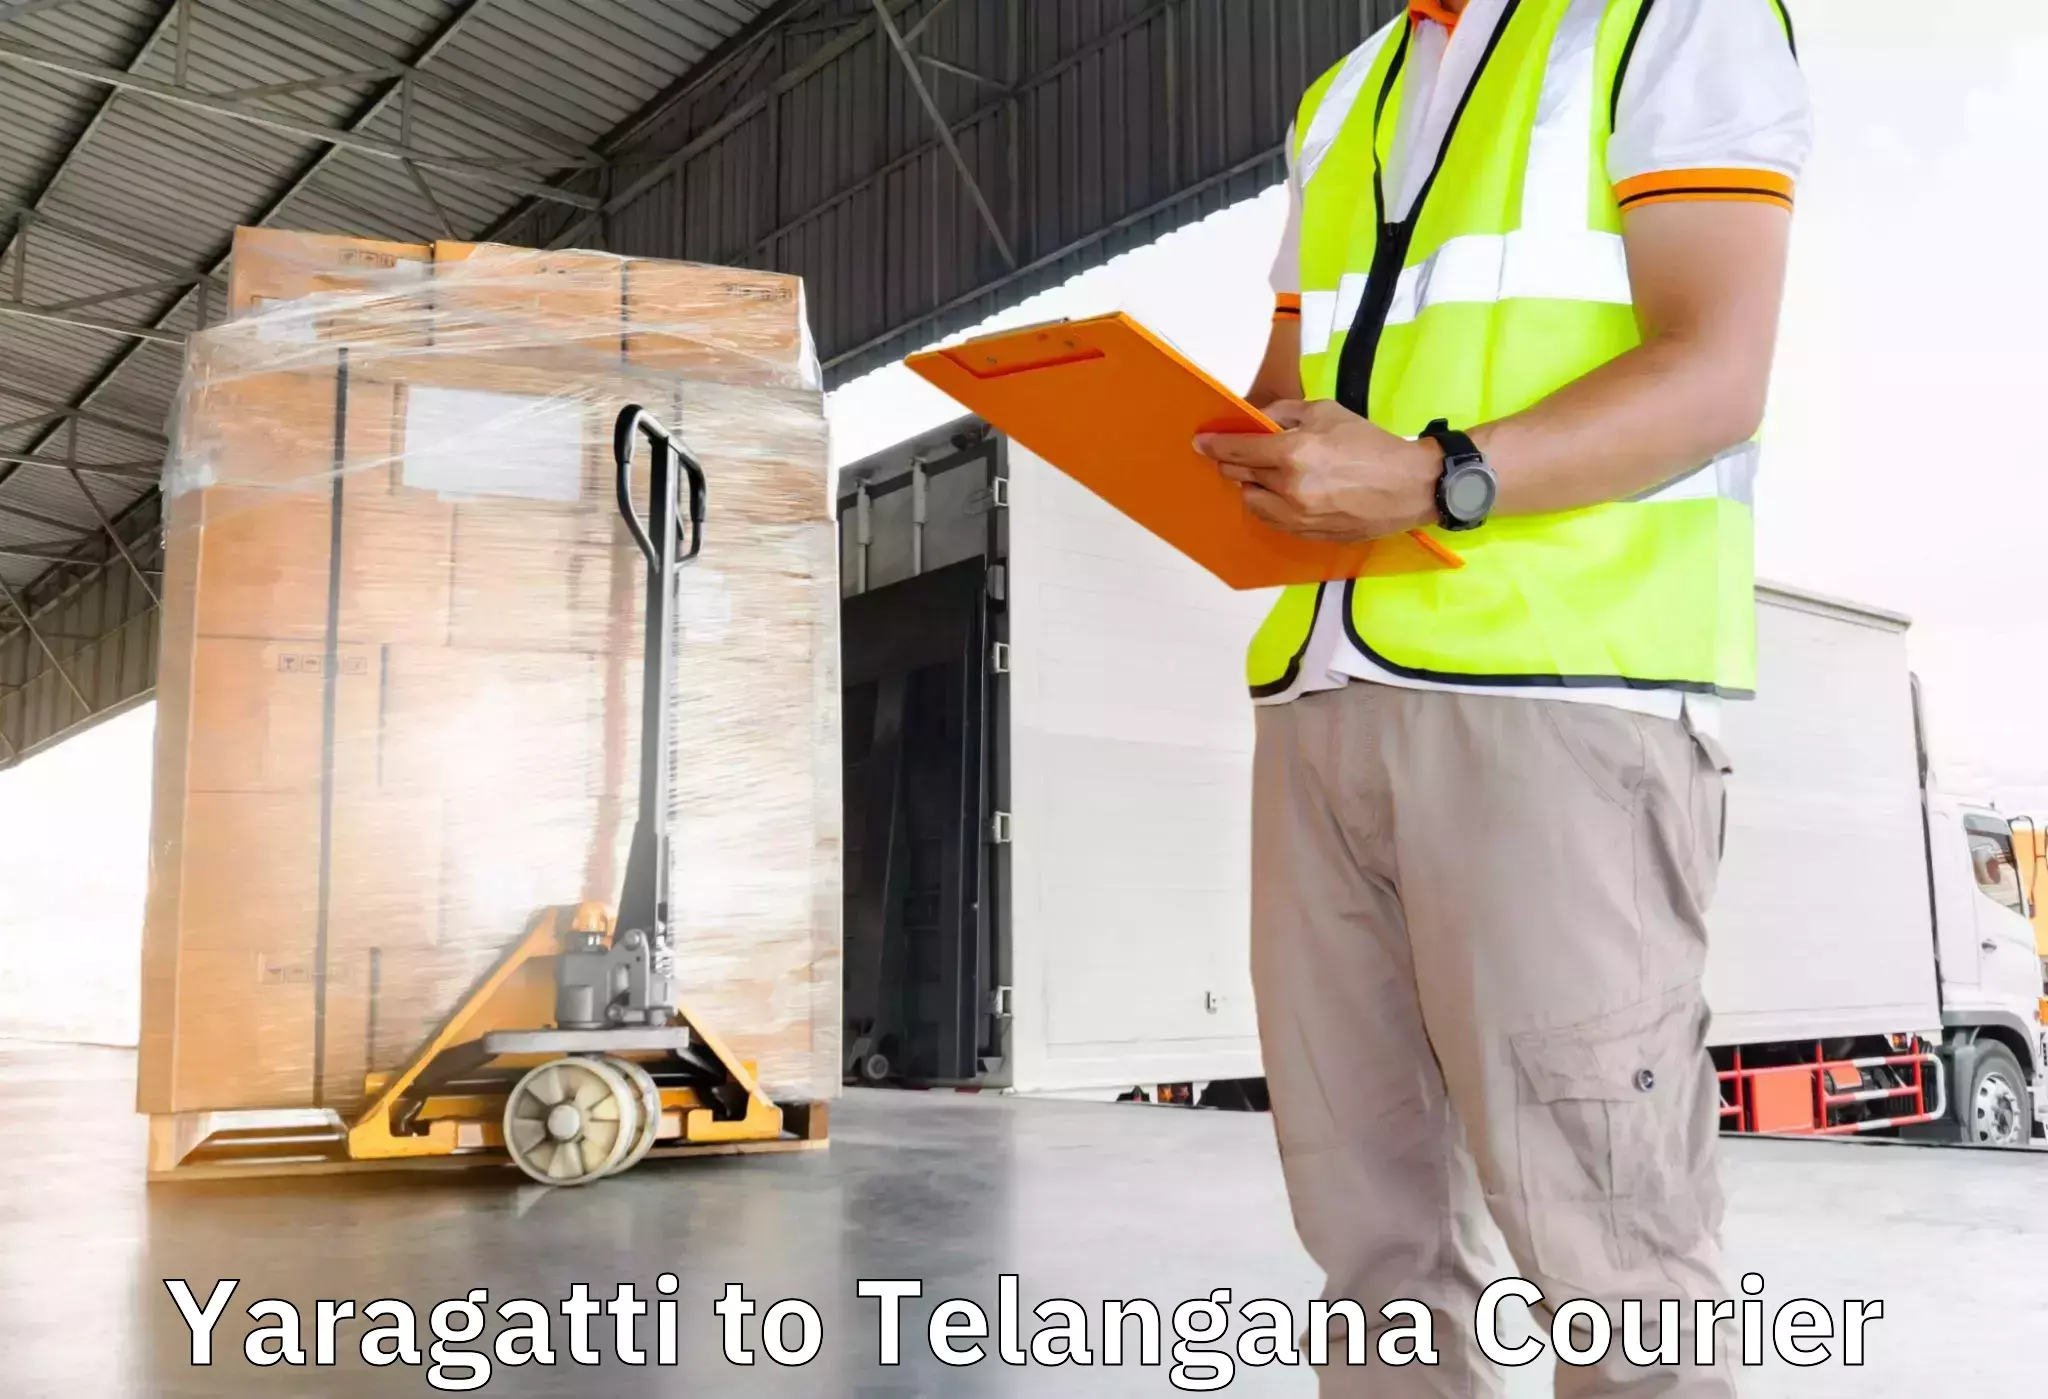 Moving and packing experts Yaragatti to Warangal